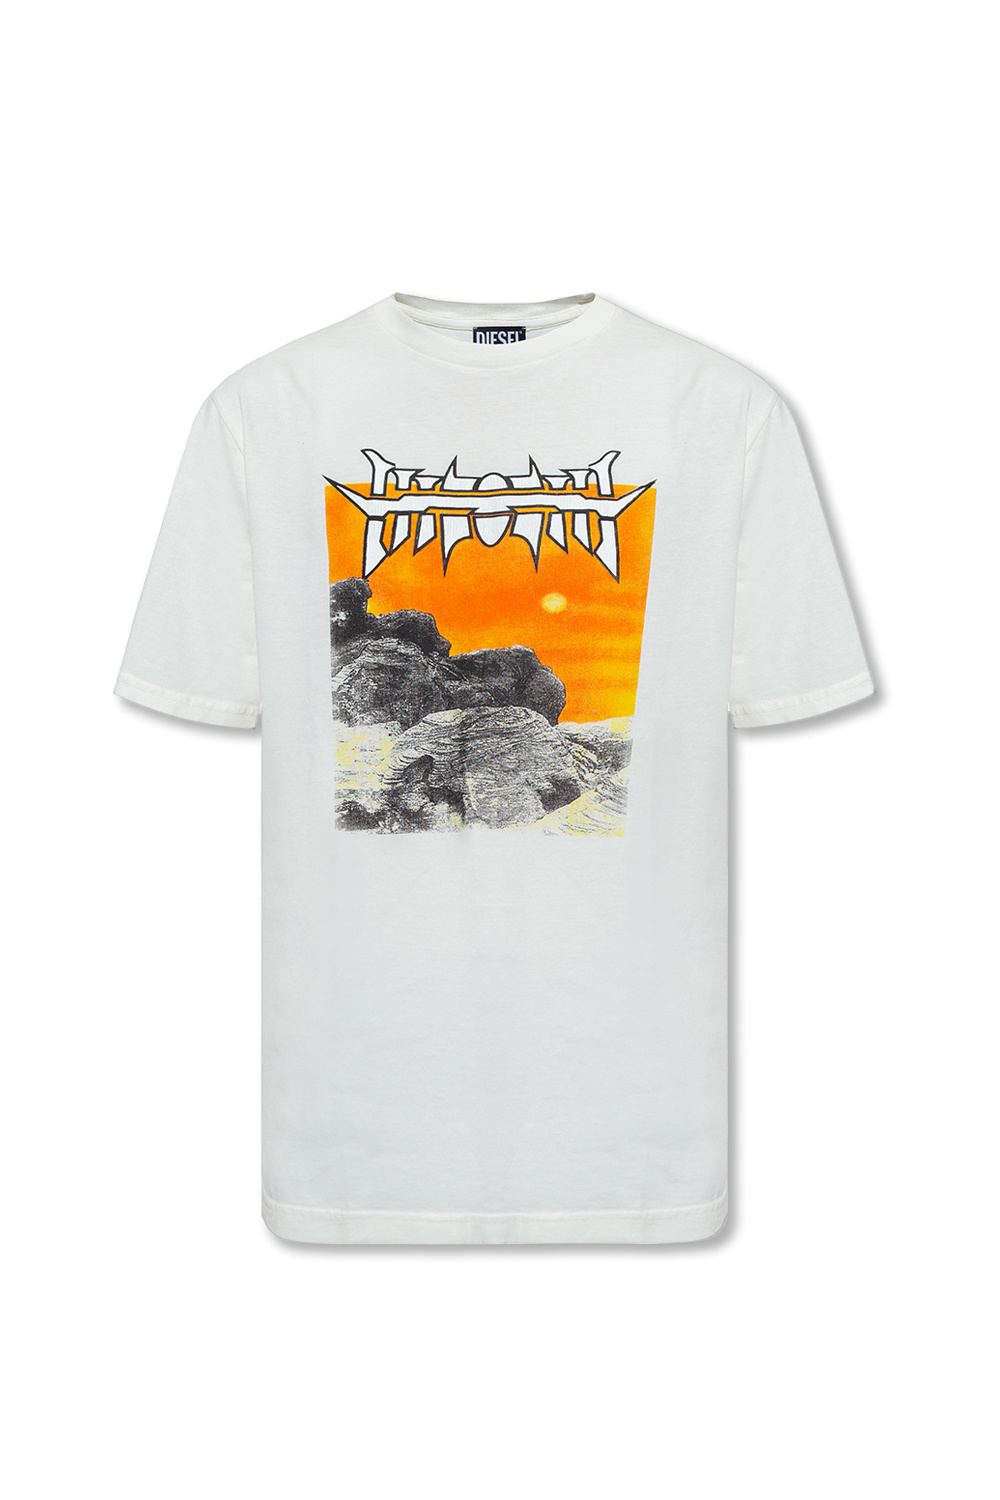 StclaircomoShops | Diesel \'T - Clothing on - anthracite shirt printed white 2 T t | Just\' 1 clubwear Men\'s vsct shirt - melange